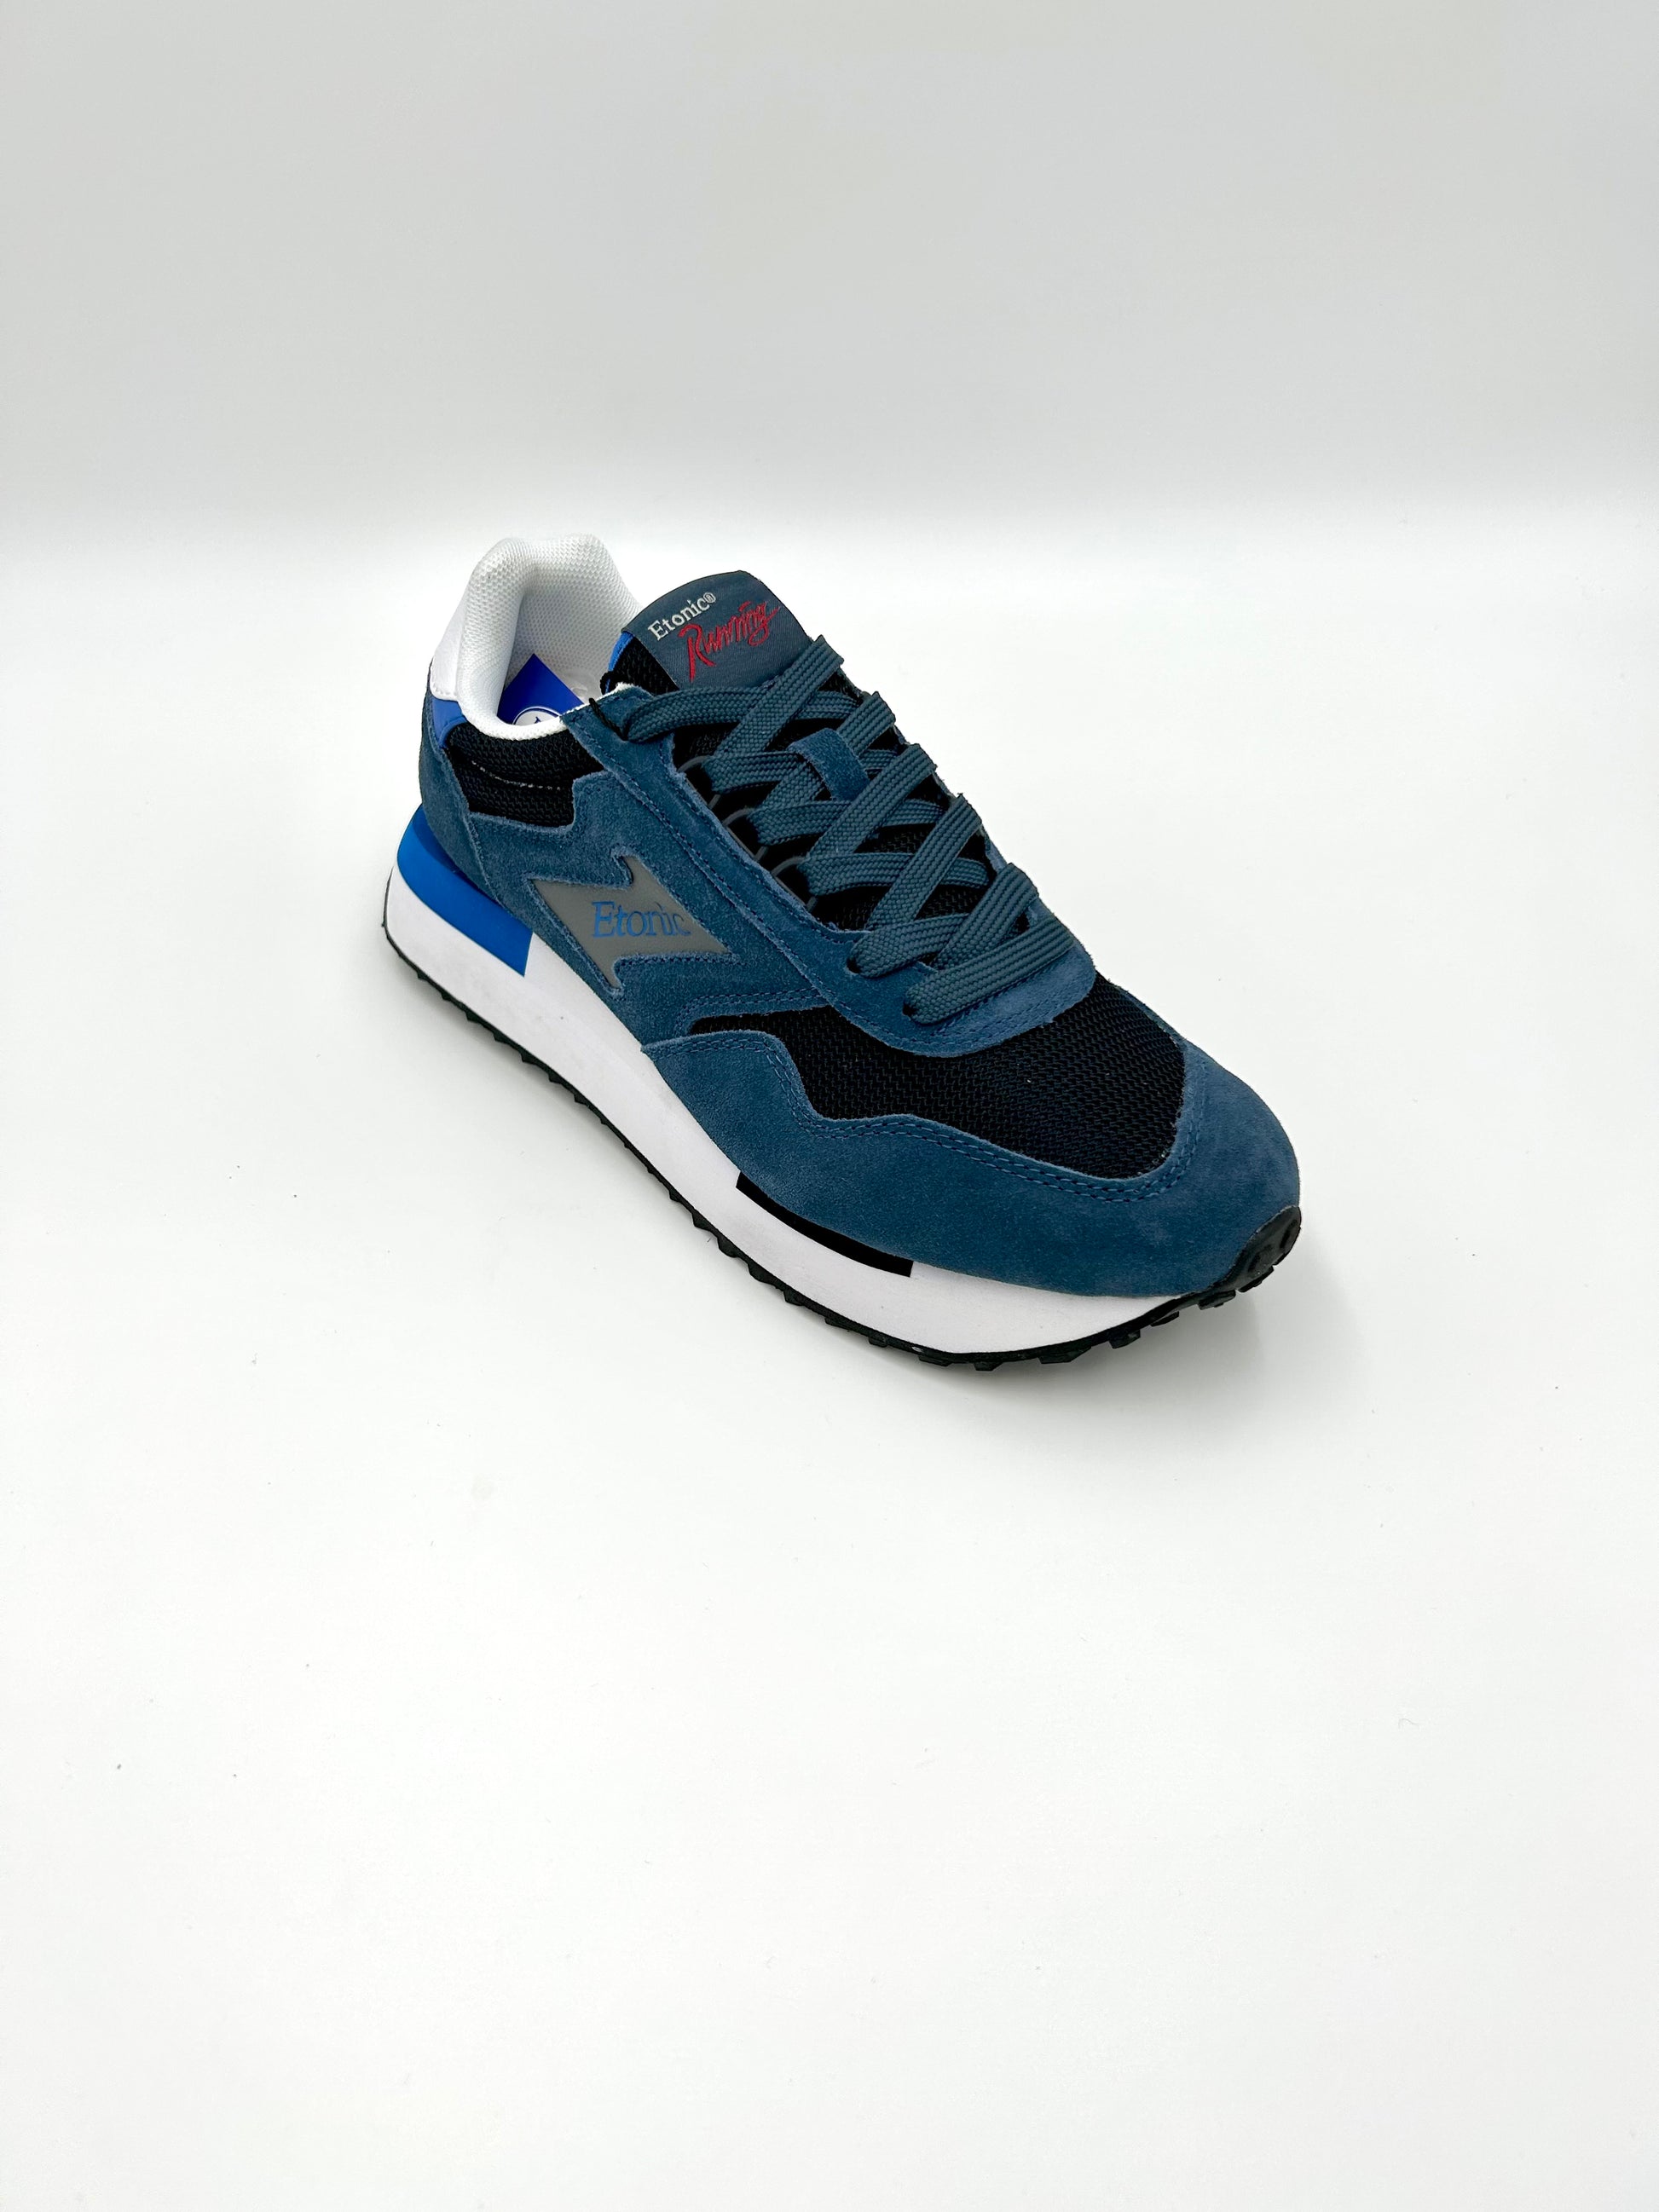 Etonic Sneakers MAESTRO ETM 215640 KM528 - blue and black - Etonic